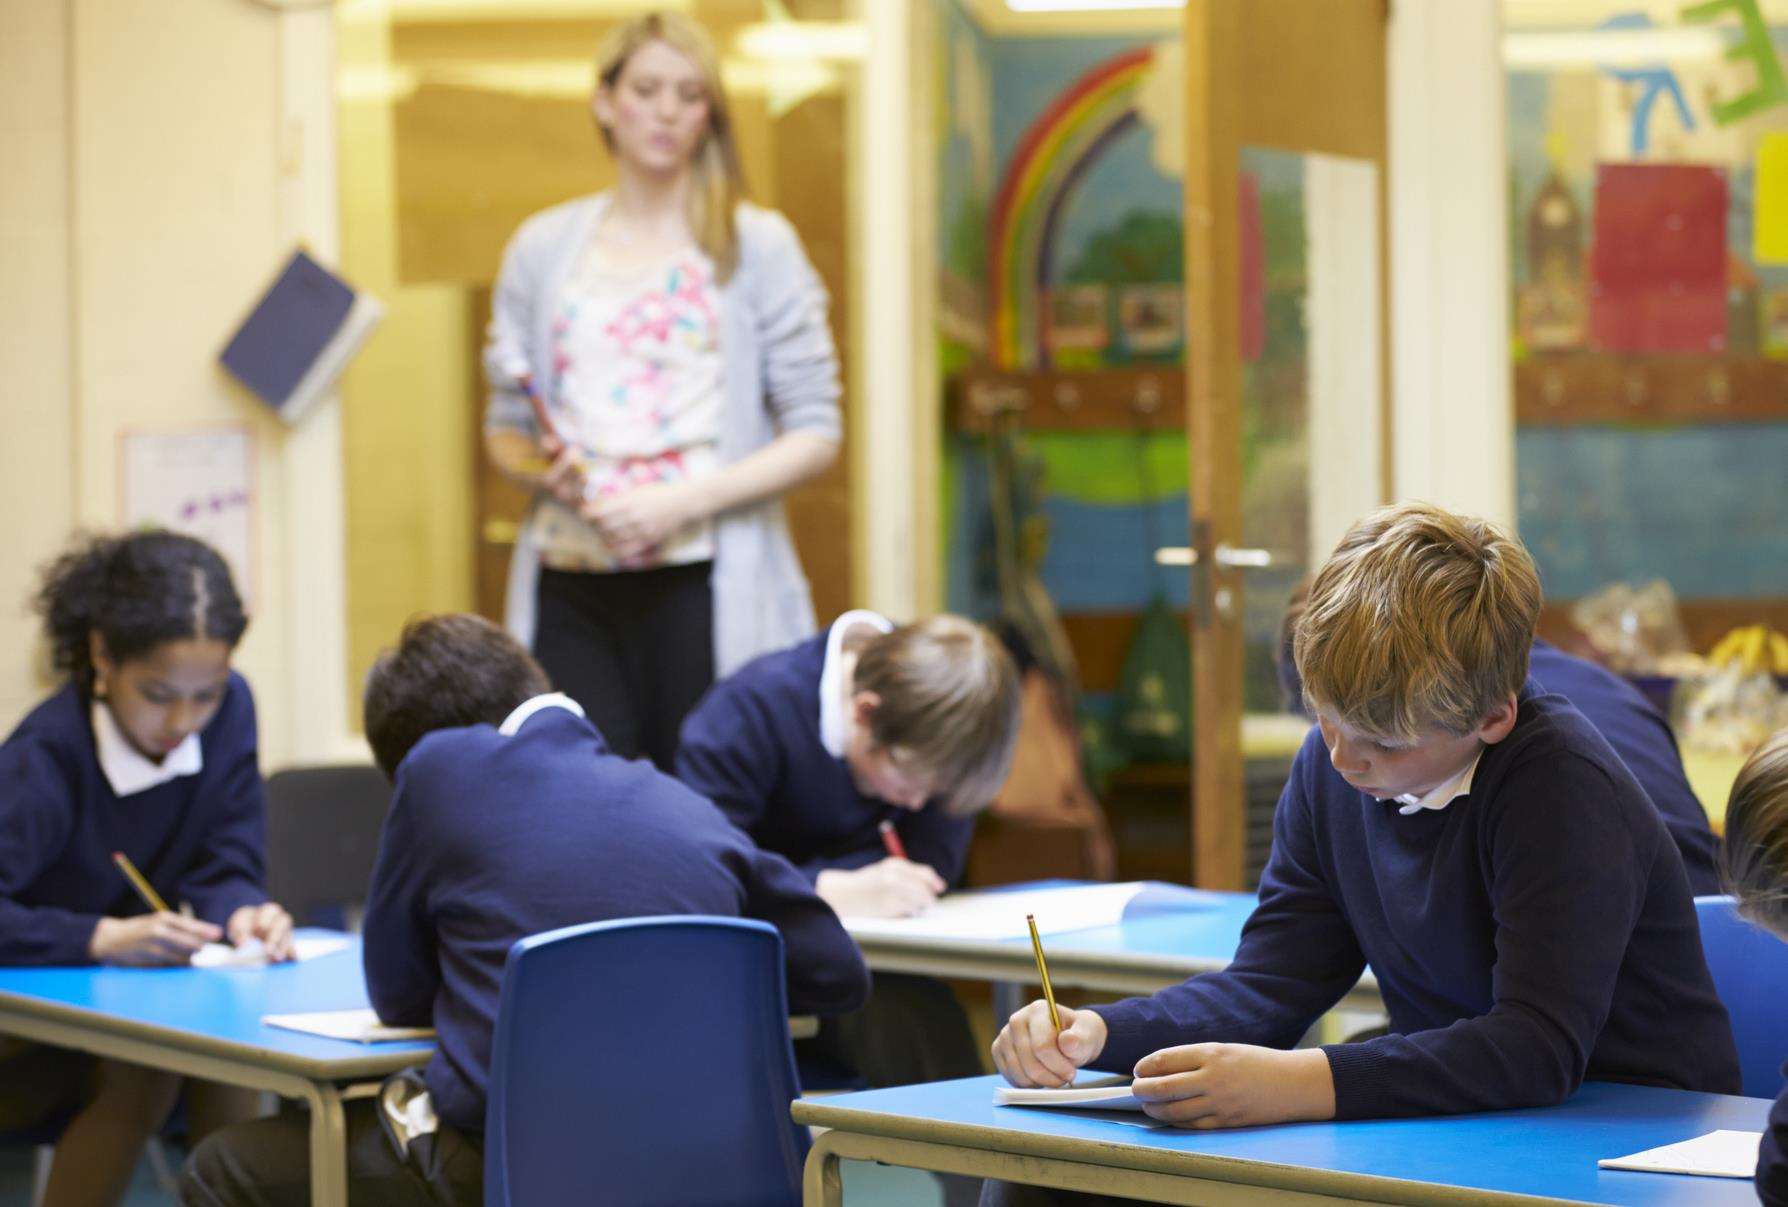 Children in care got higher grades than their counterparts across Kent